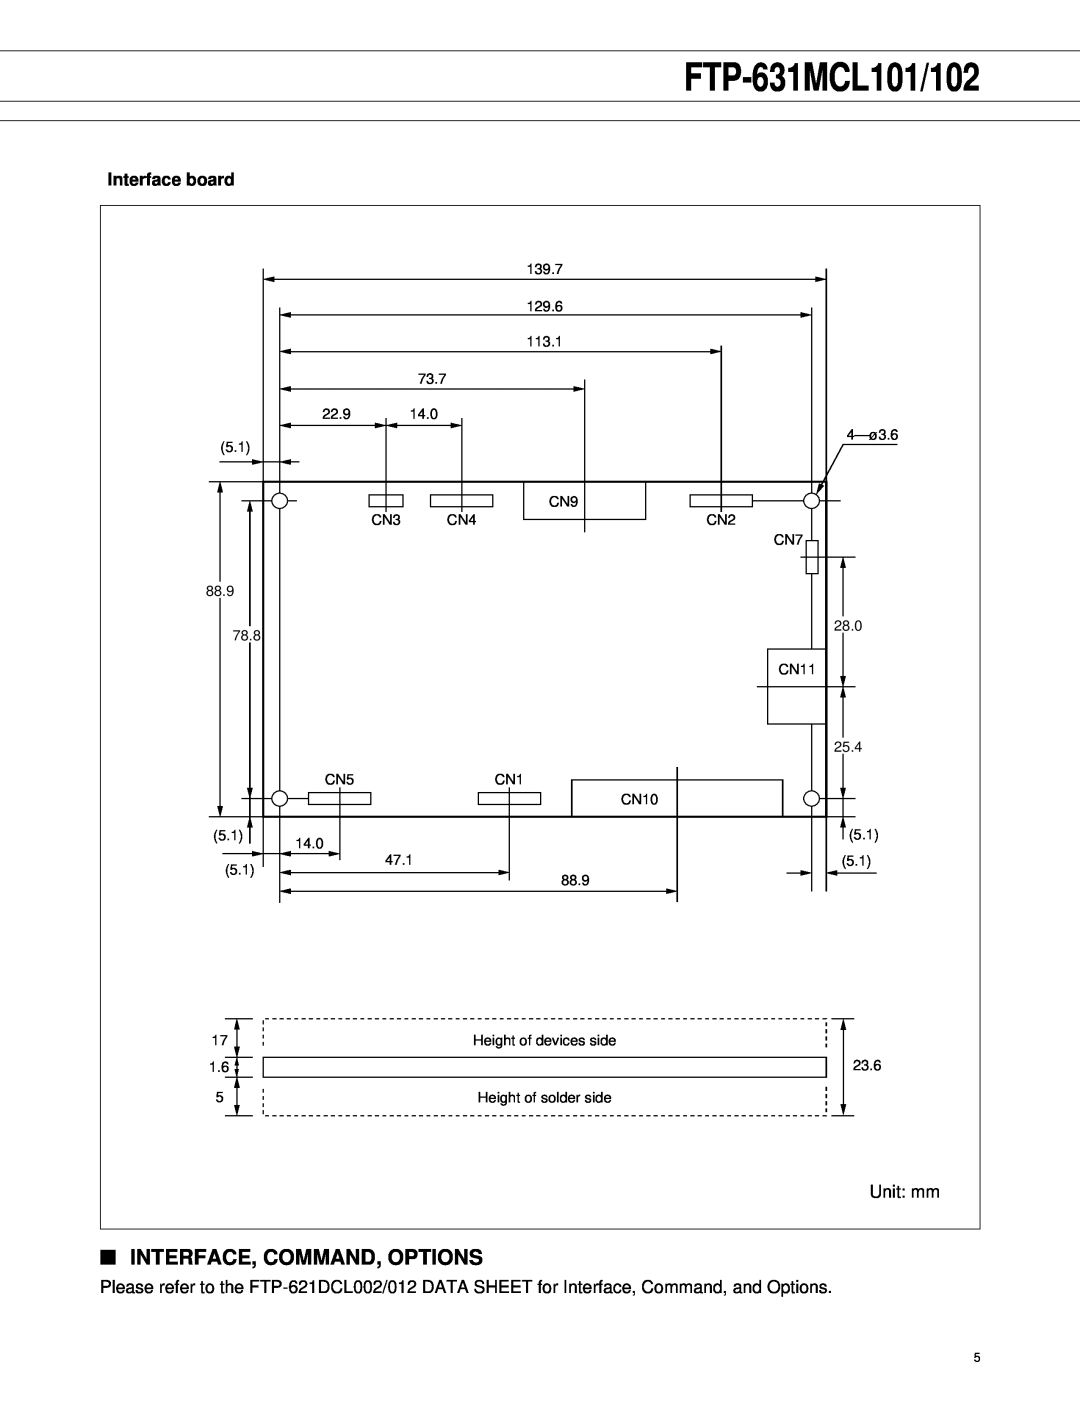 Fujitsu FTP-631MCL102 manual Interface, Command, Options, Interface board, FTP-631MCL101/102 